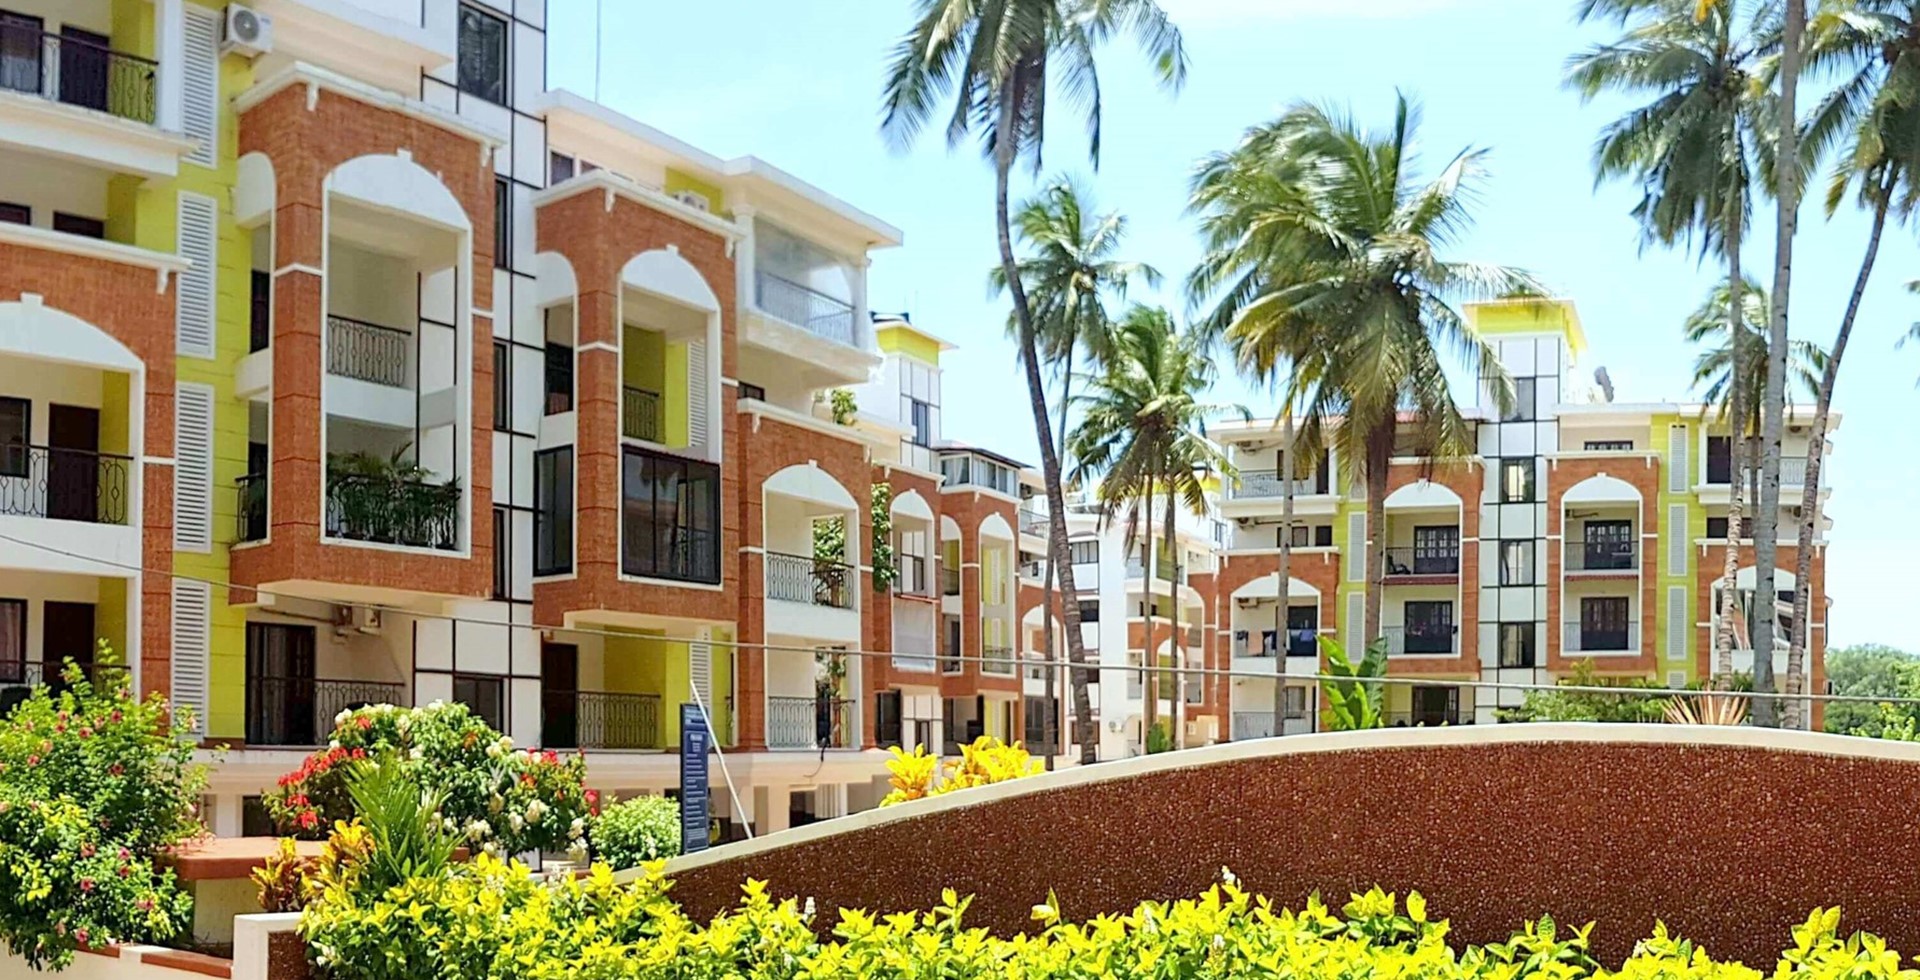 Vacation Rentals in Goa, Candolim